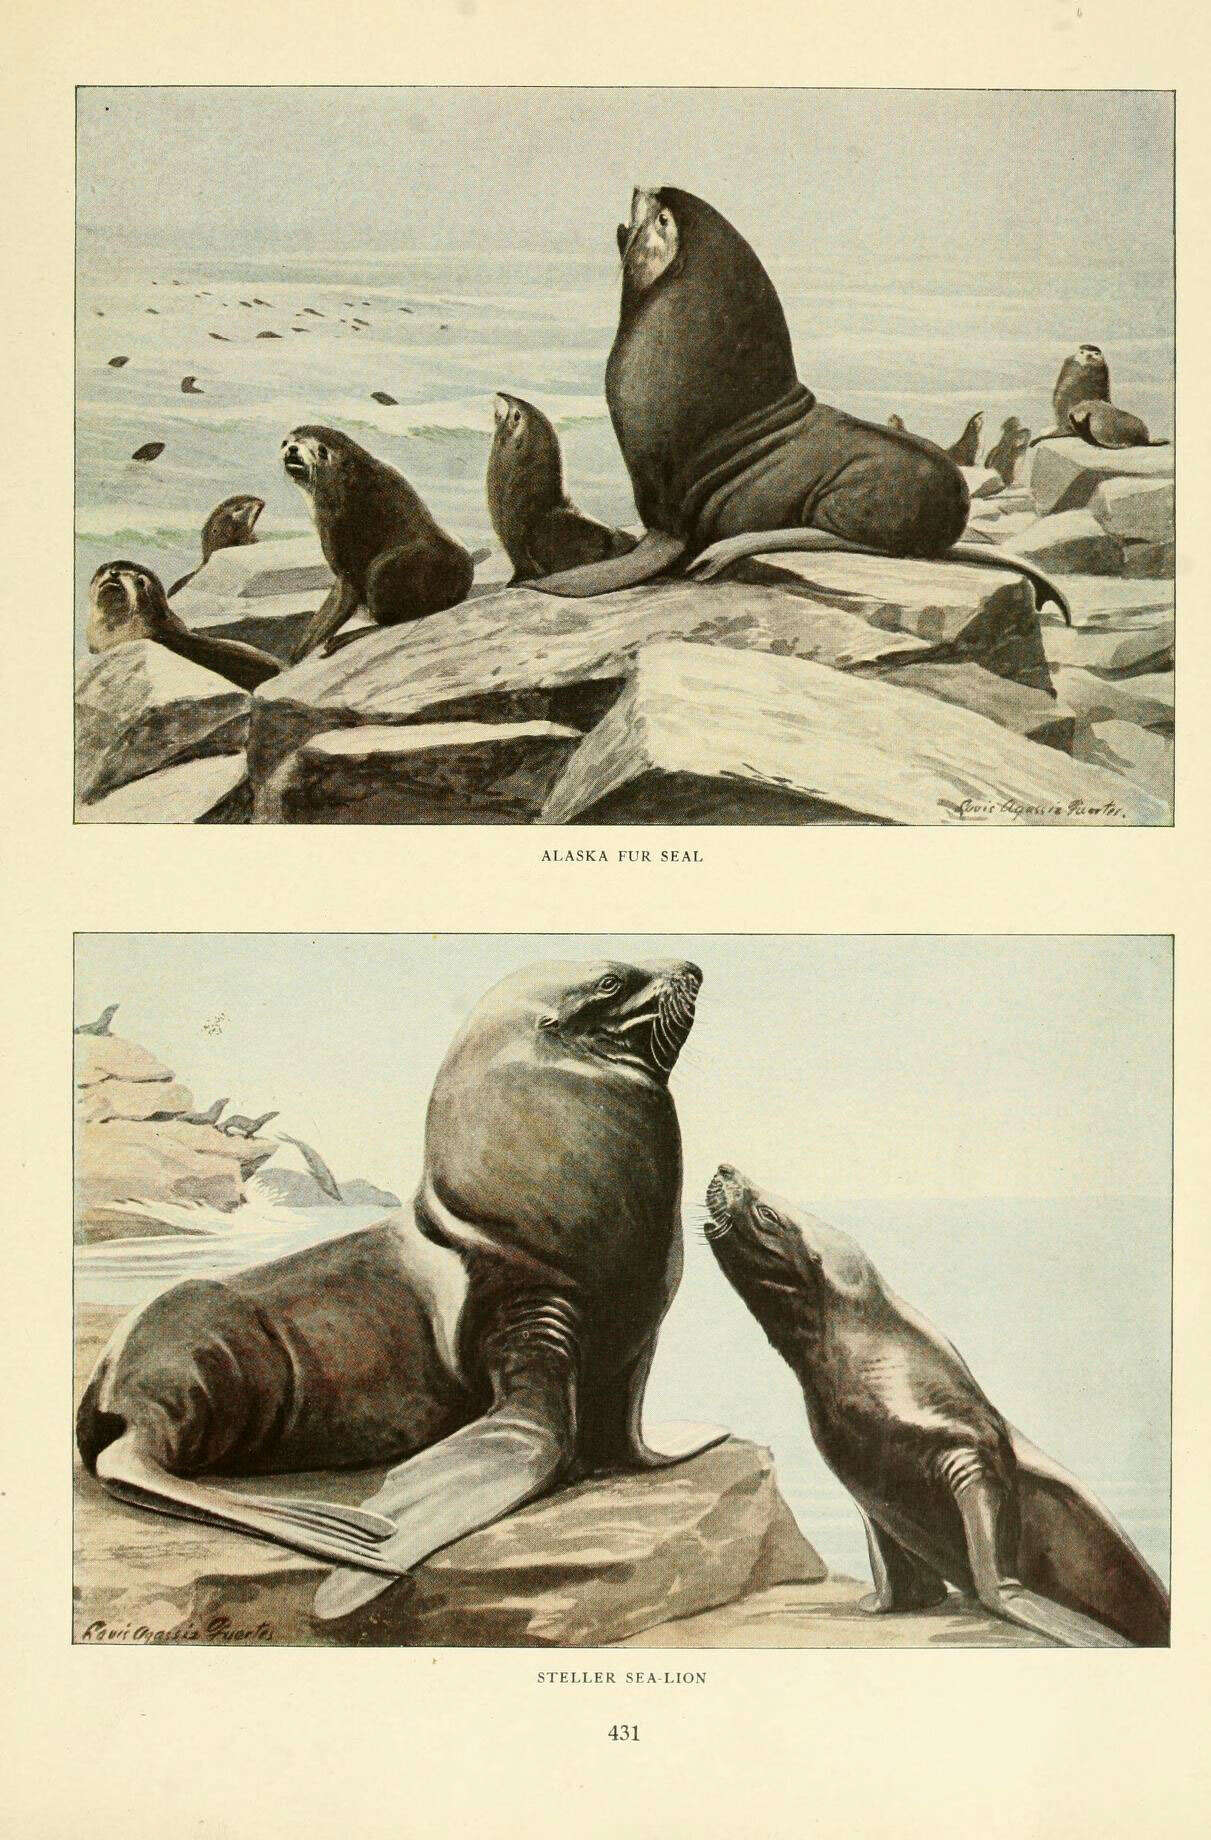 Plancia ëd Callorhinus J. E. Gray 1859